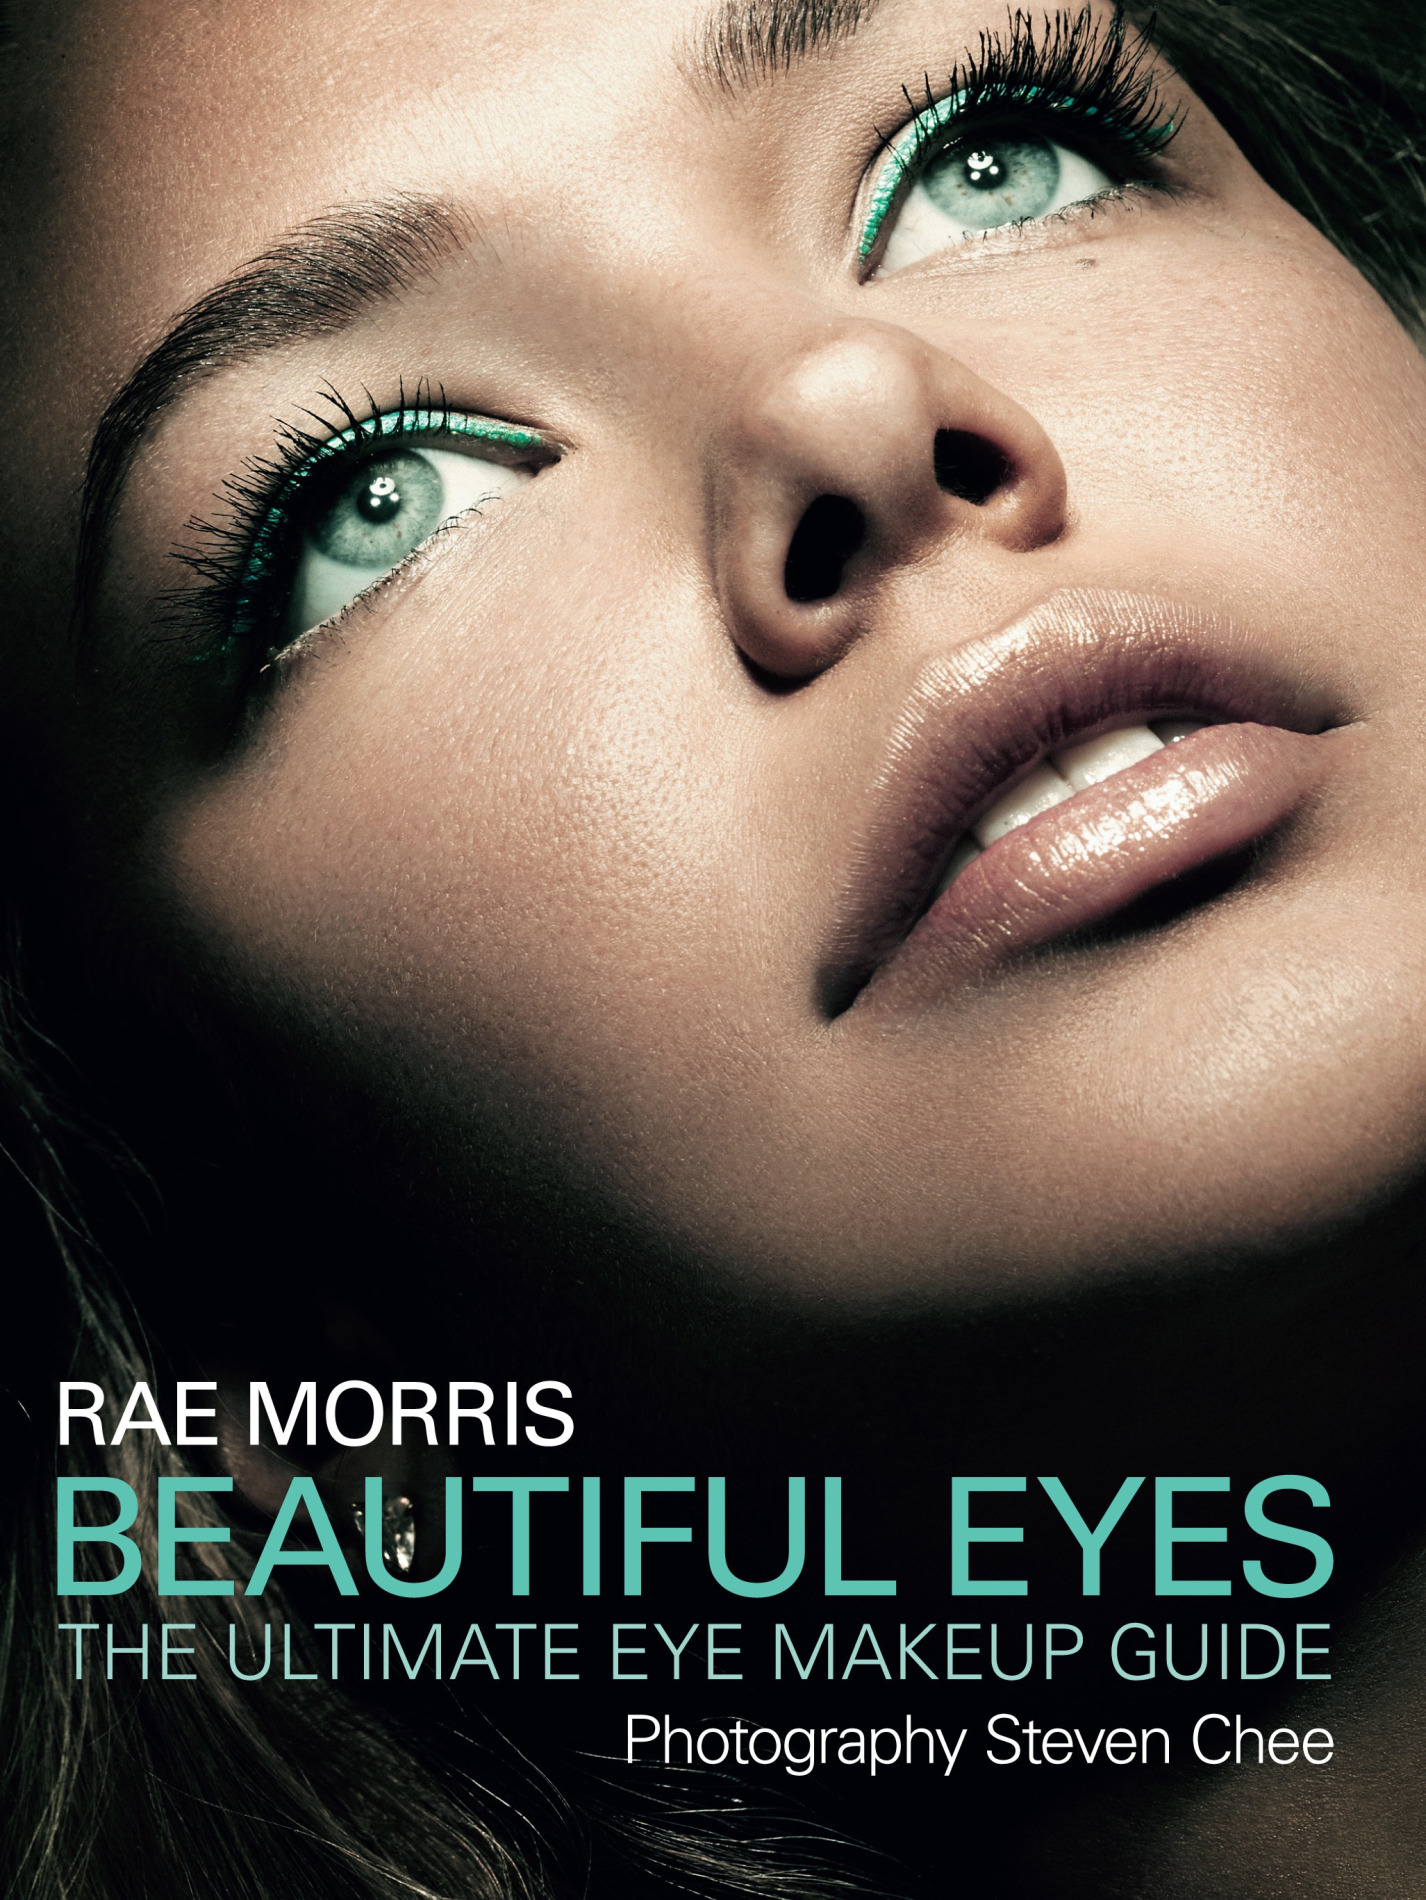 You have beautiful eyes. Make up книги. Eye. Your Eyes are beautiful.